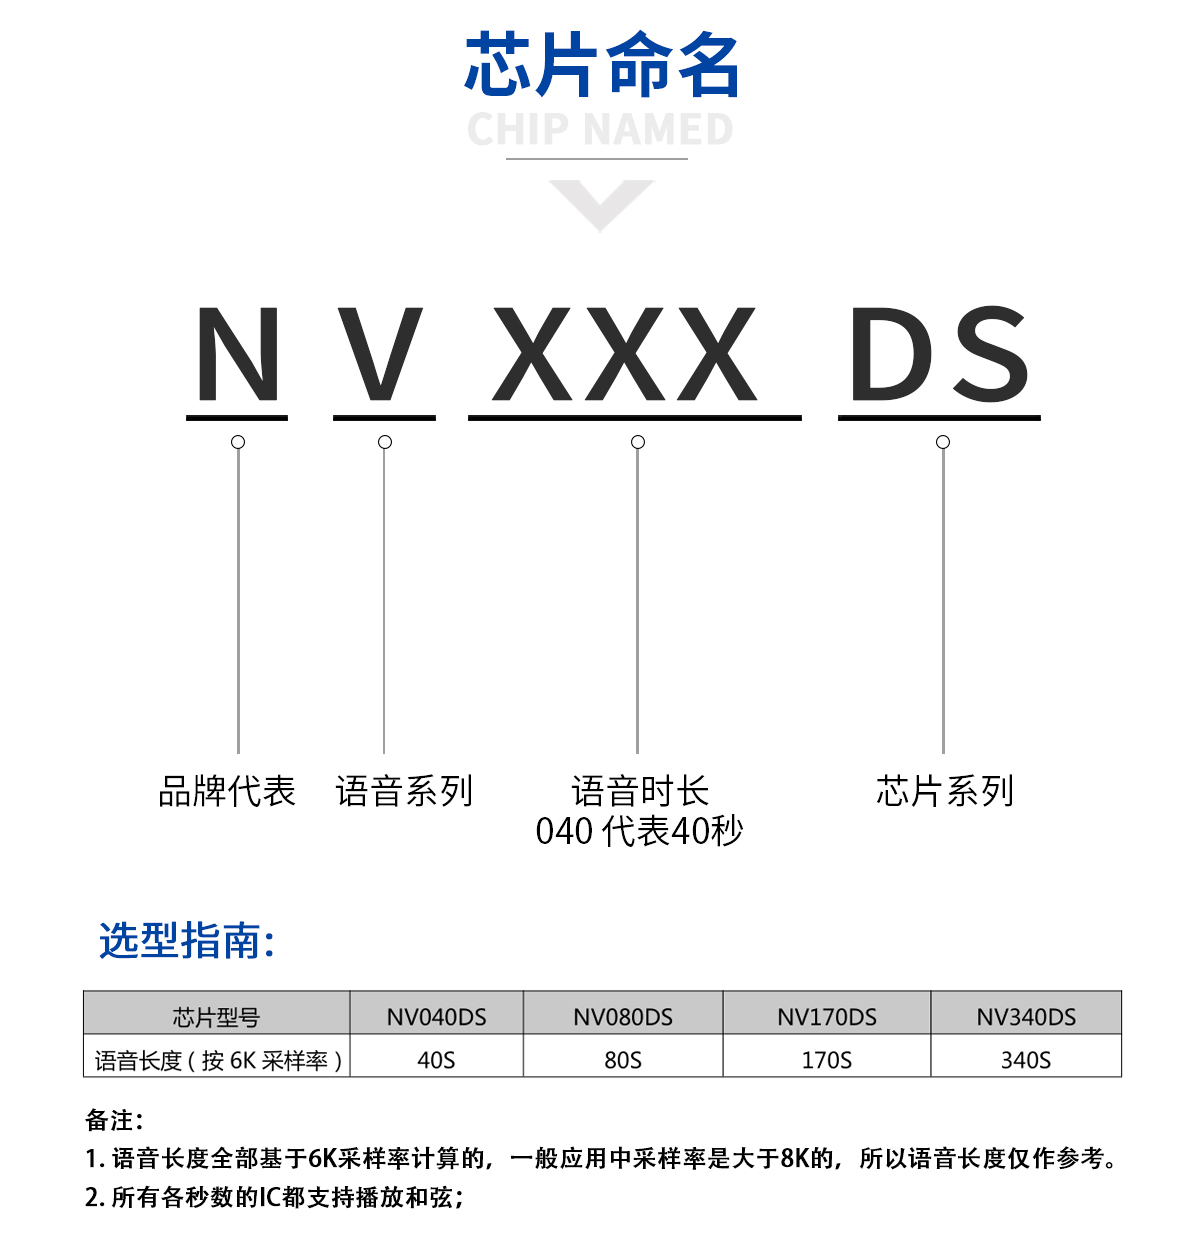 NVDS系列语音芯片